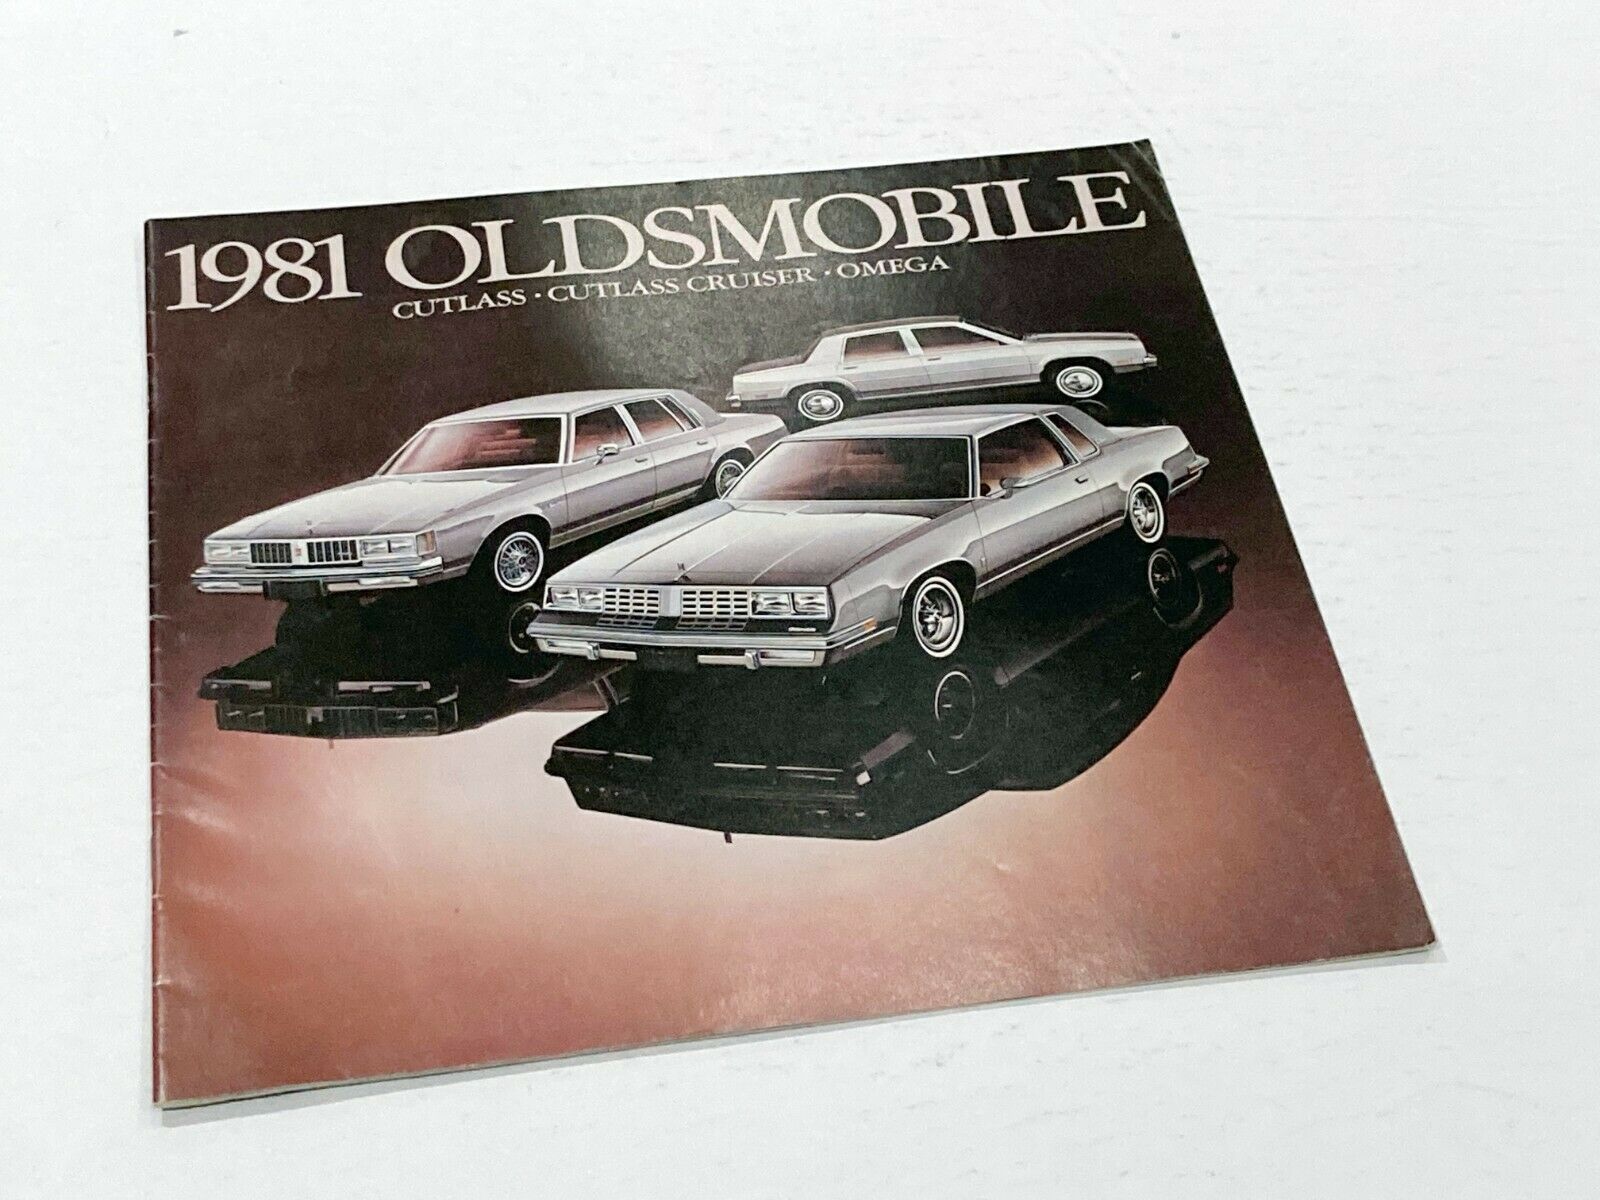 1981 Oldsmobile Cutlass Omega Cutlass Cruiser Brochure